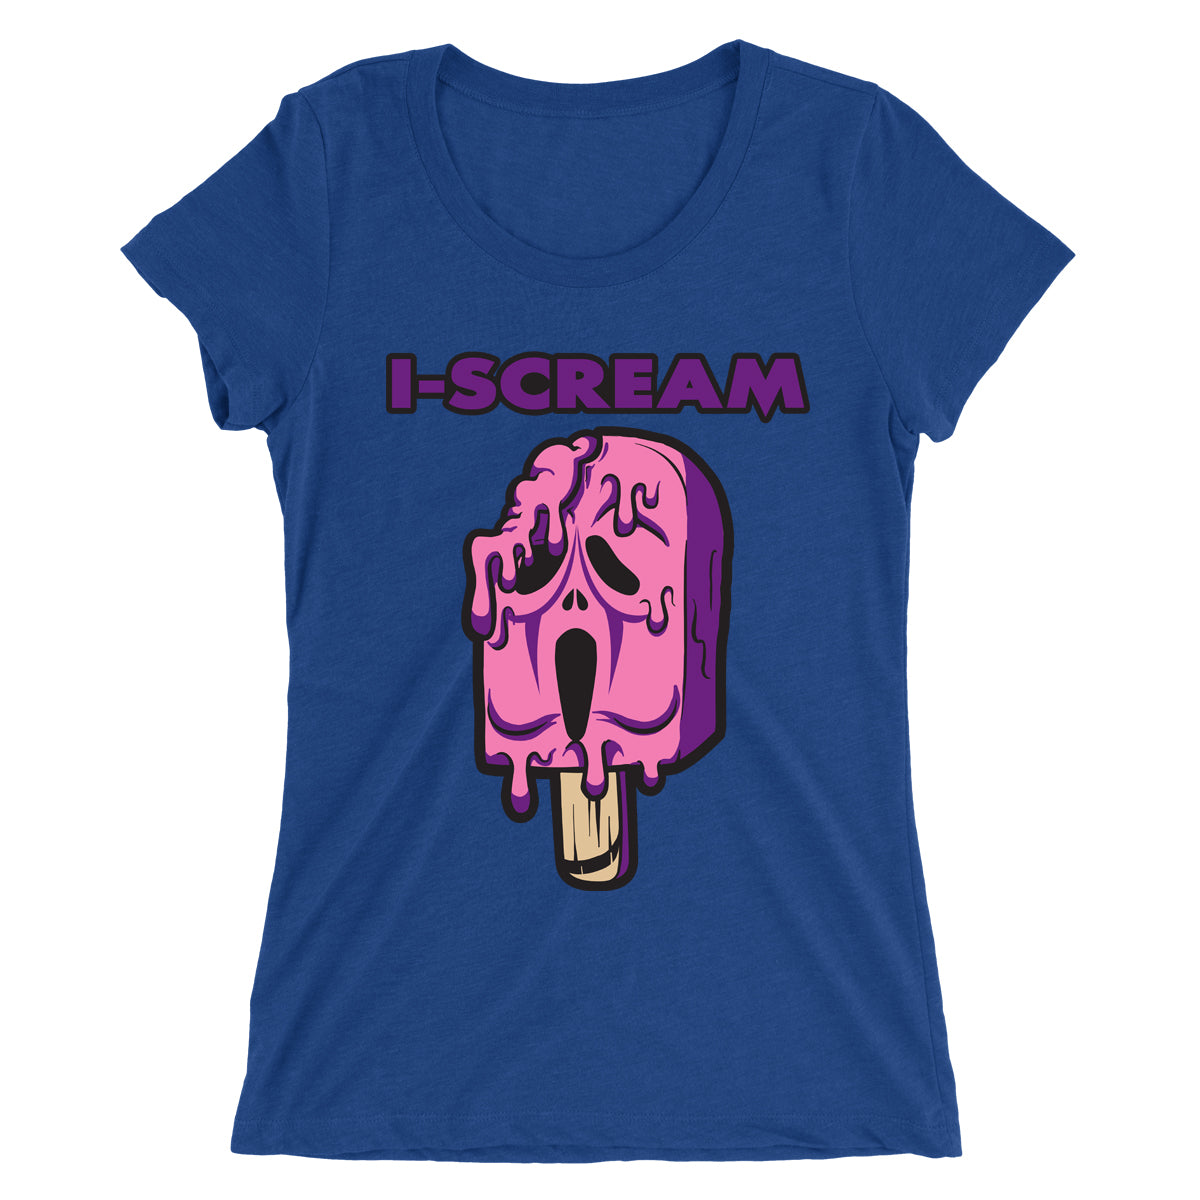 Movie The Food - I-Scream Women's T-Shirt - Royal Blue